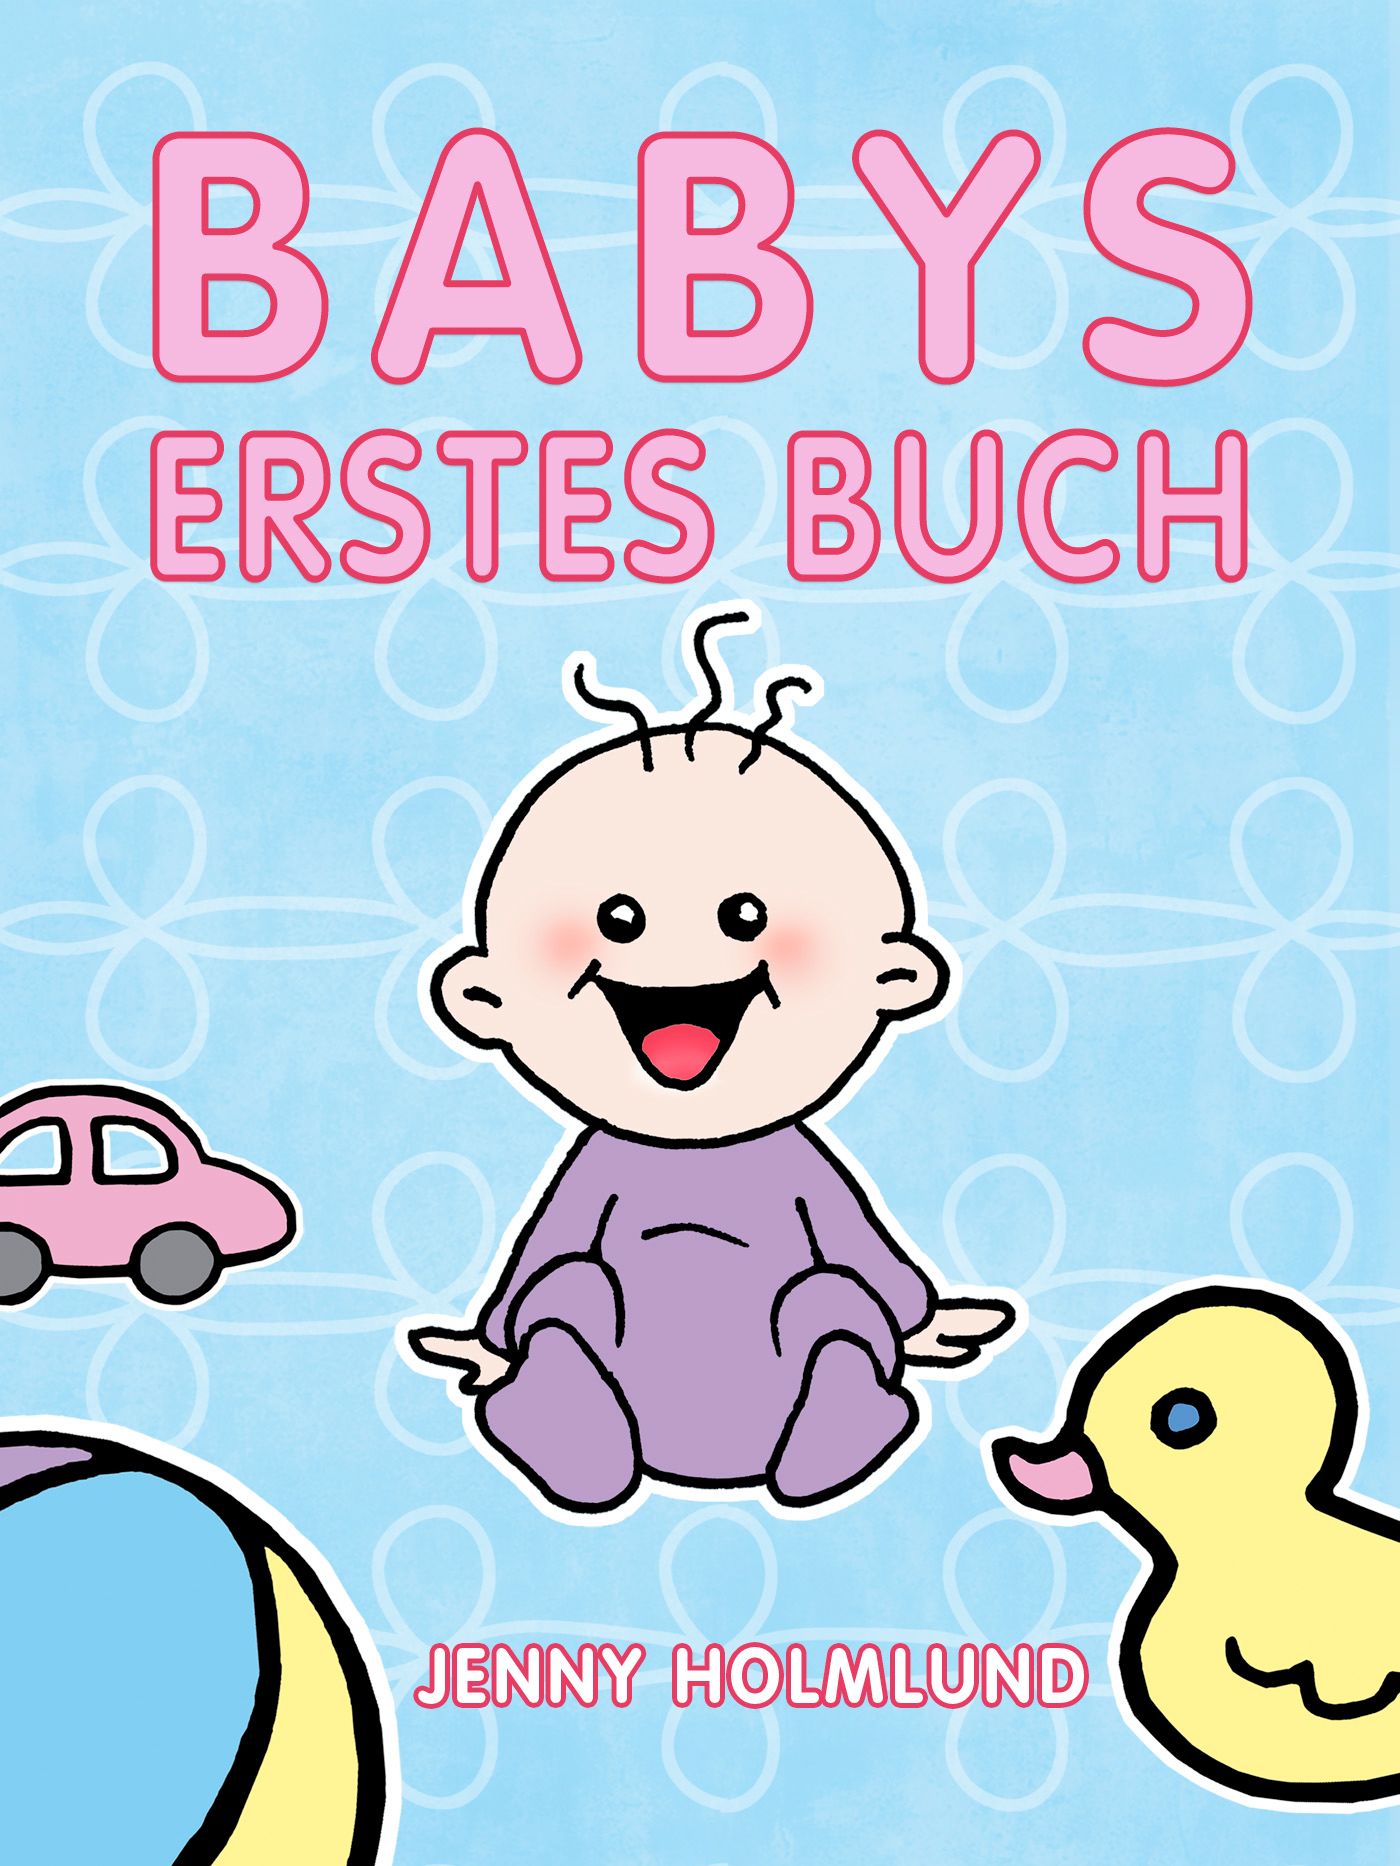 Babys Erstes Buch , eBook by Jenny Holmlund